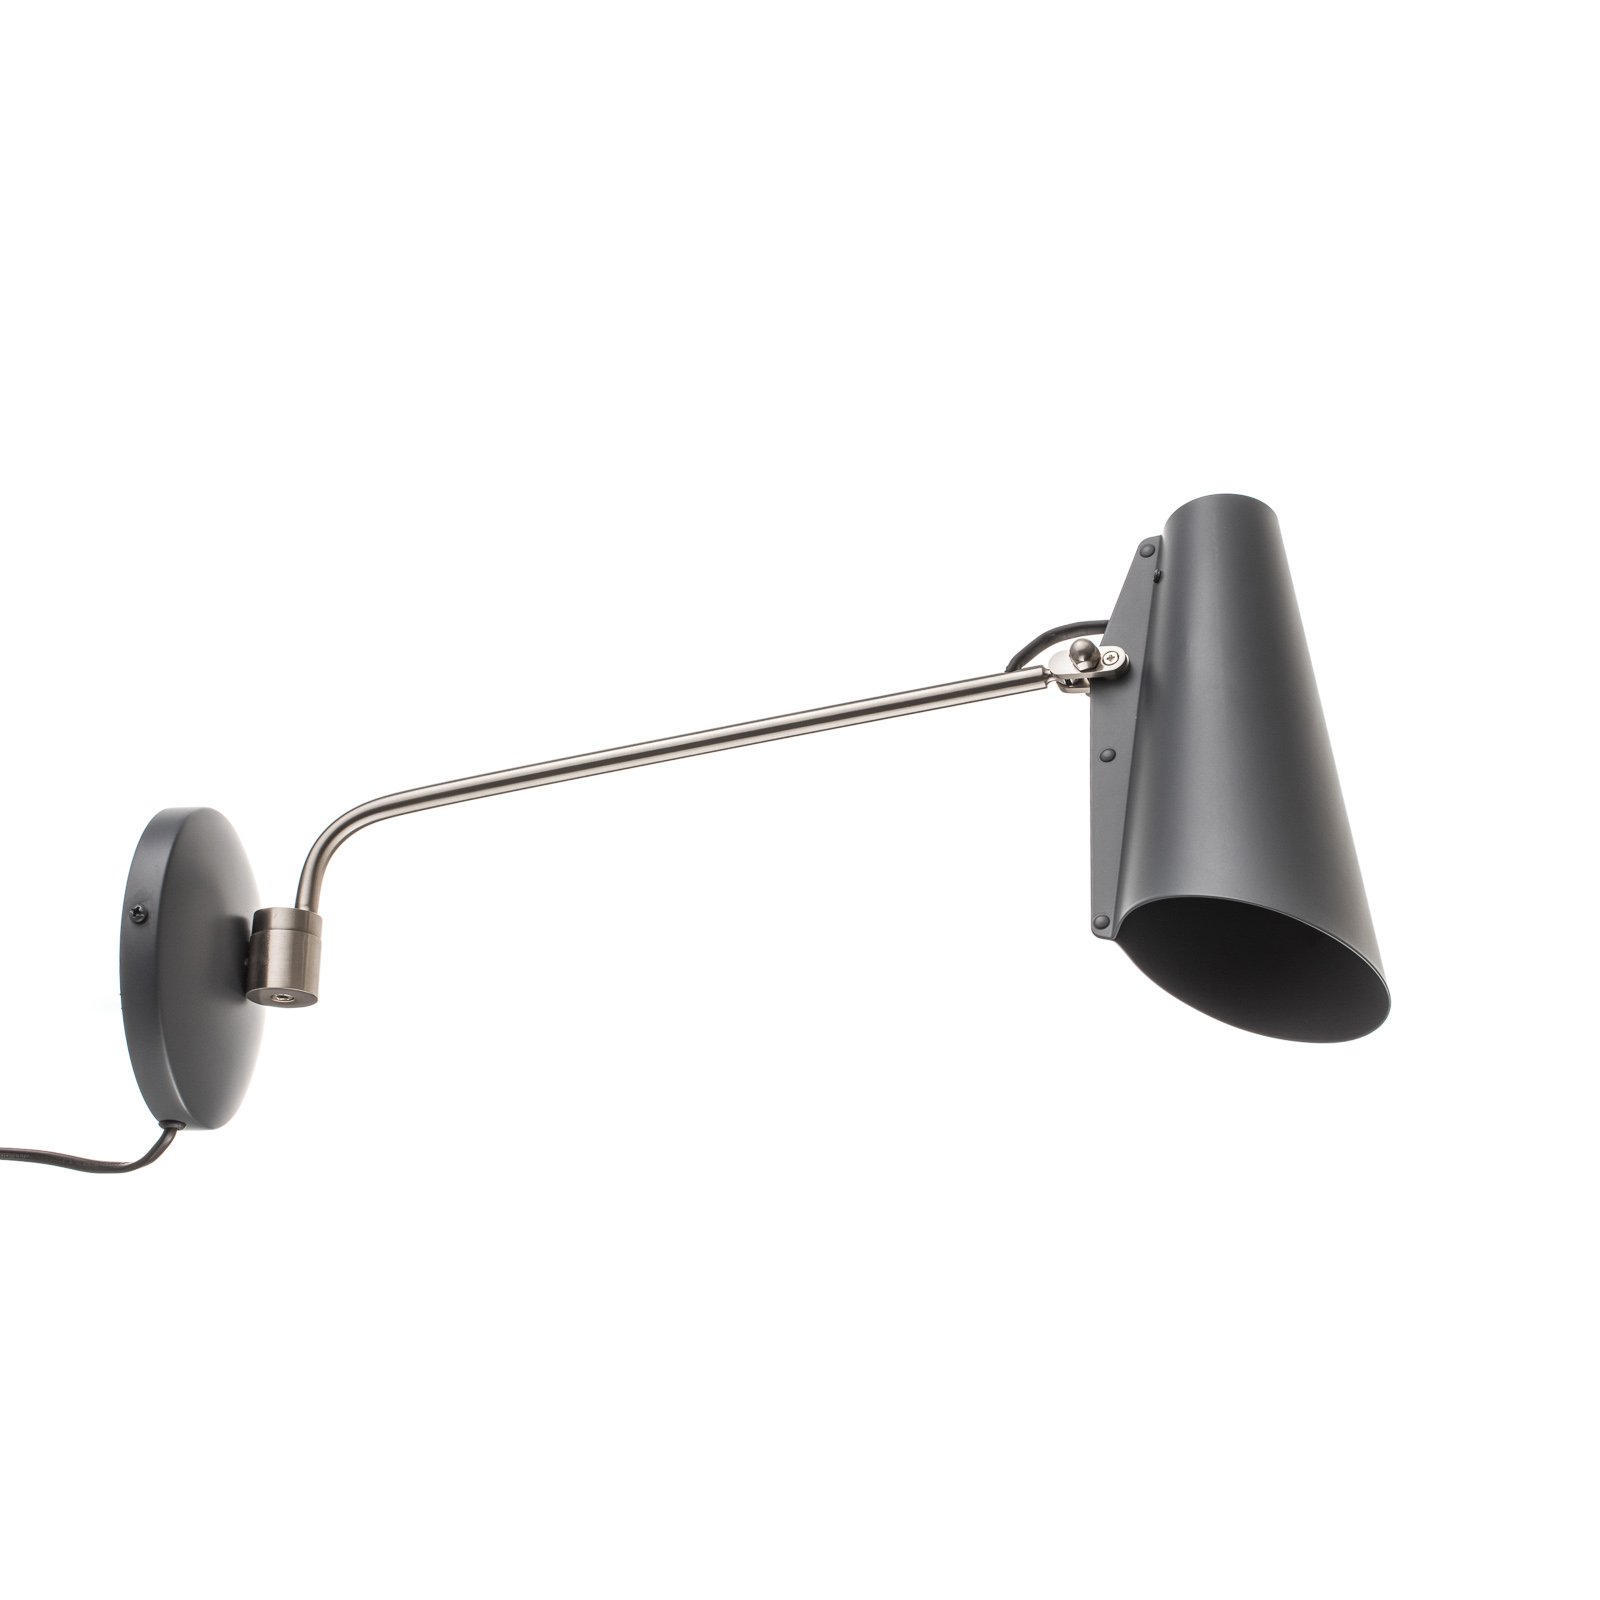 Northern Birdy - wandlamp met stekker, 53 cm